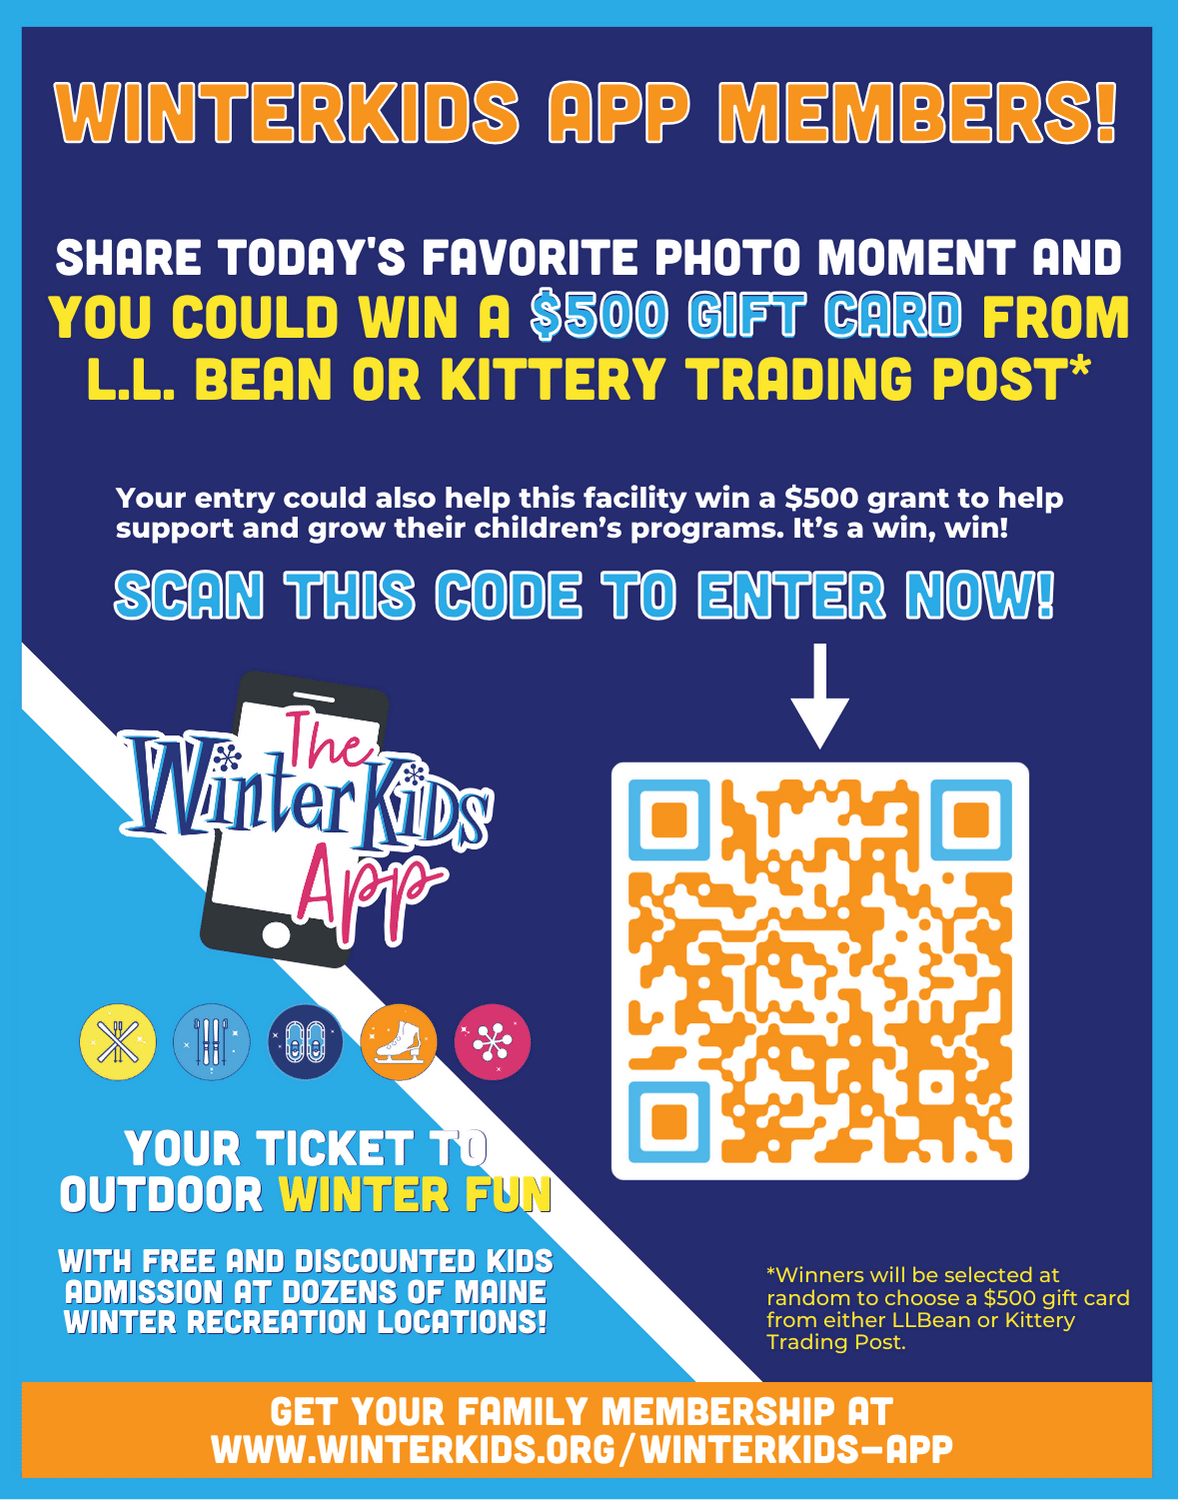 WinterKids App Photo Contest Signage